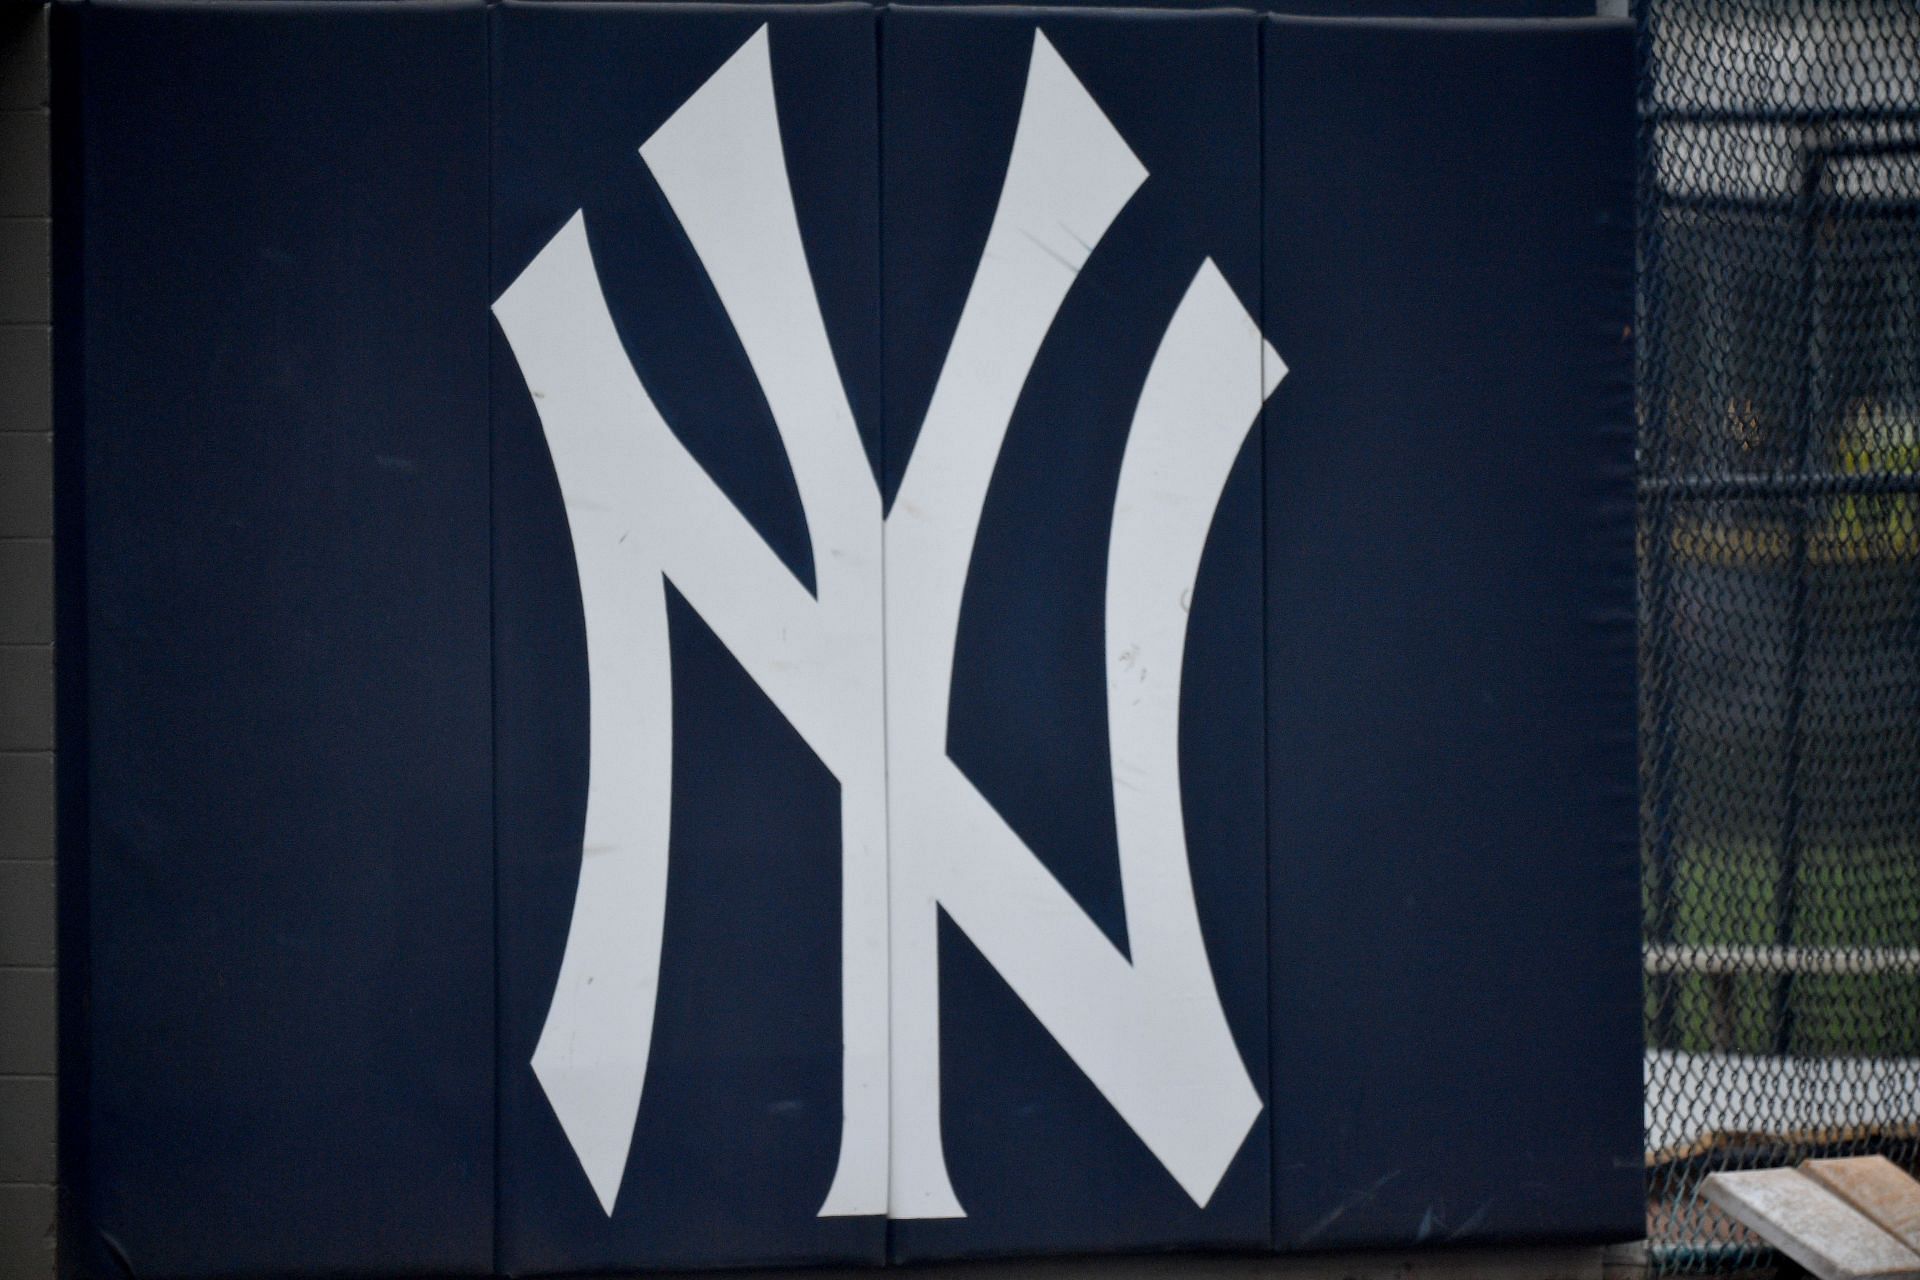 Baseball news: New York Yankees, Seinfeld, George Steinbrenner